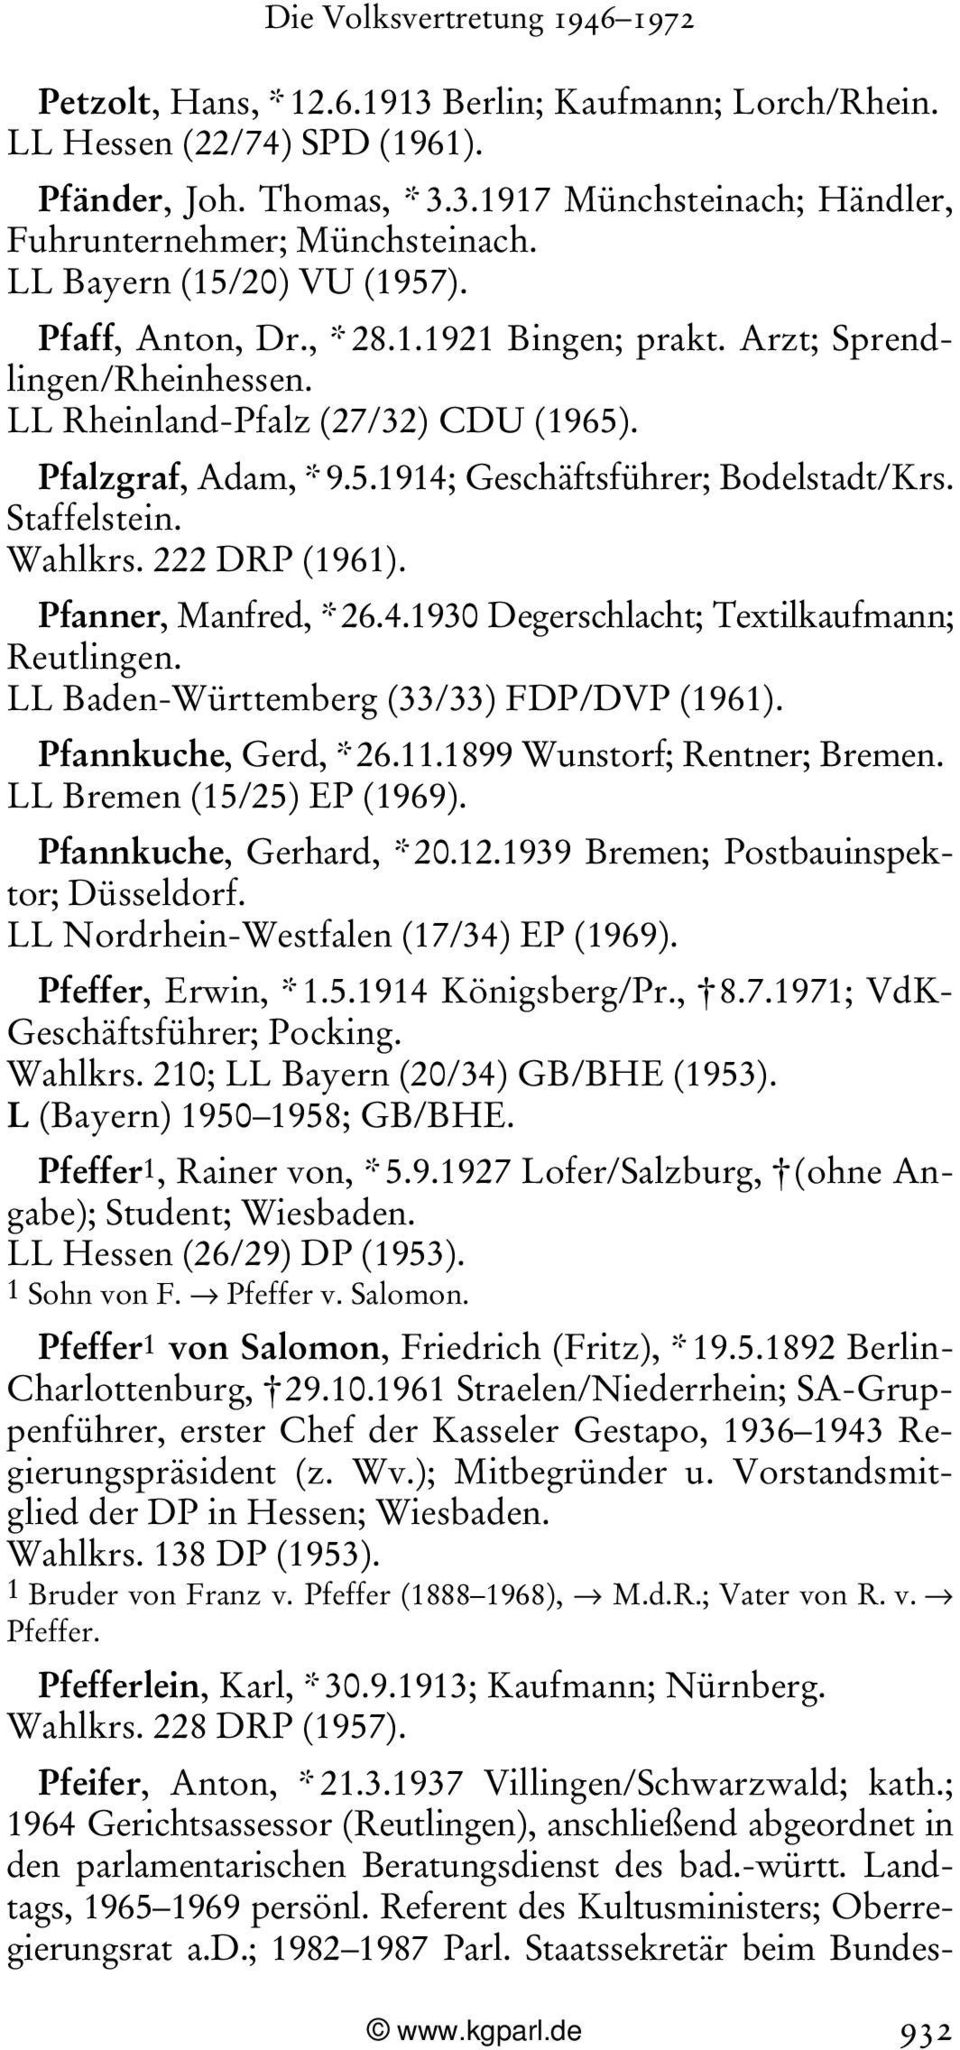 Staffelstein. Wahlkrs. 222 DRP (1961). Pfanner, Manfred, * 26.4.1930 Degerschlacht; Textilkaufmann; Reutlingen. LL Baden-Württemberg (33/33) FDP/DVP (1961). Pfannkuche, Gerd, * 26.11.